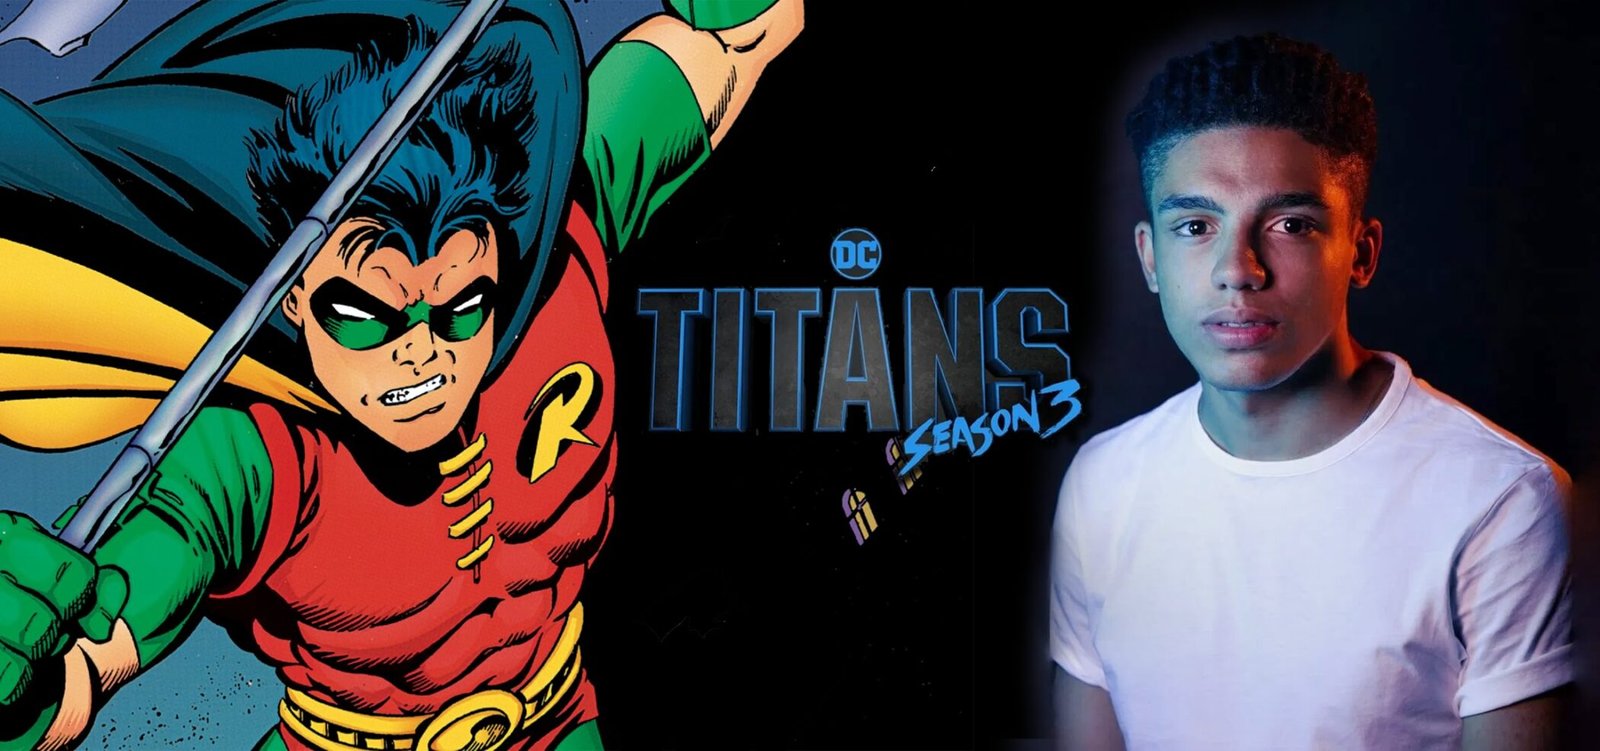 Titans Terceira Temporada | Jay Lycurgo escalado para interpretar Tim Drake